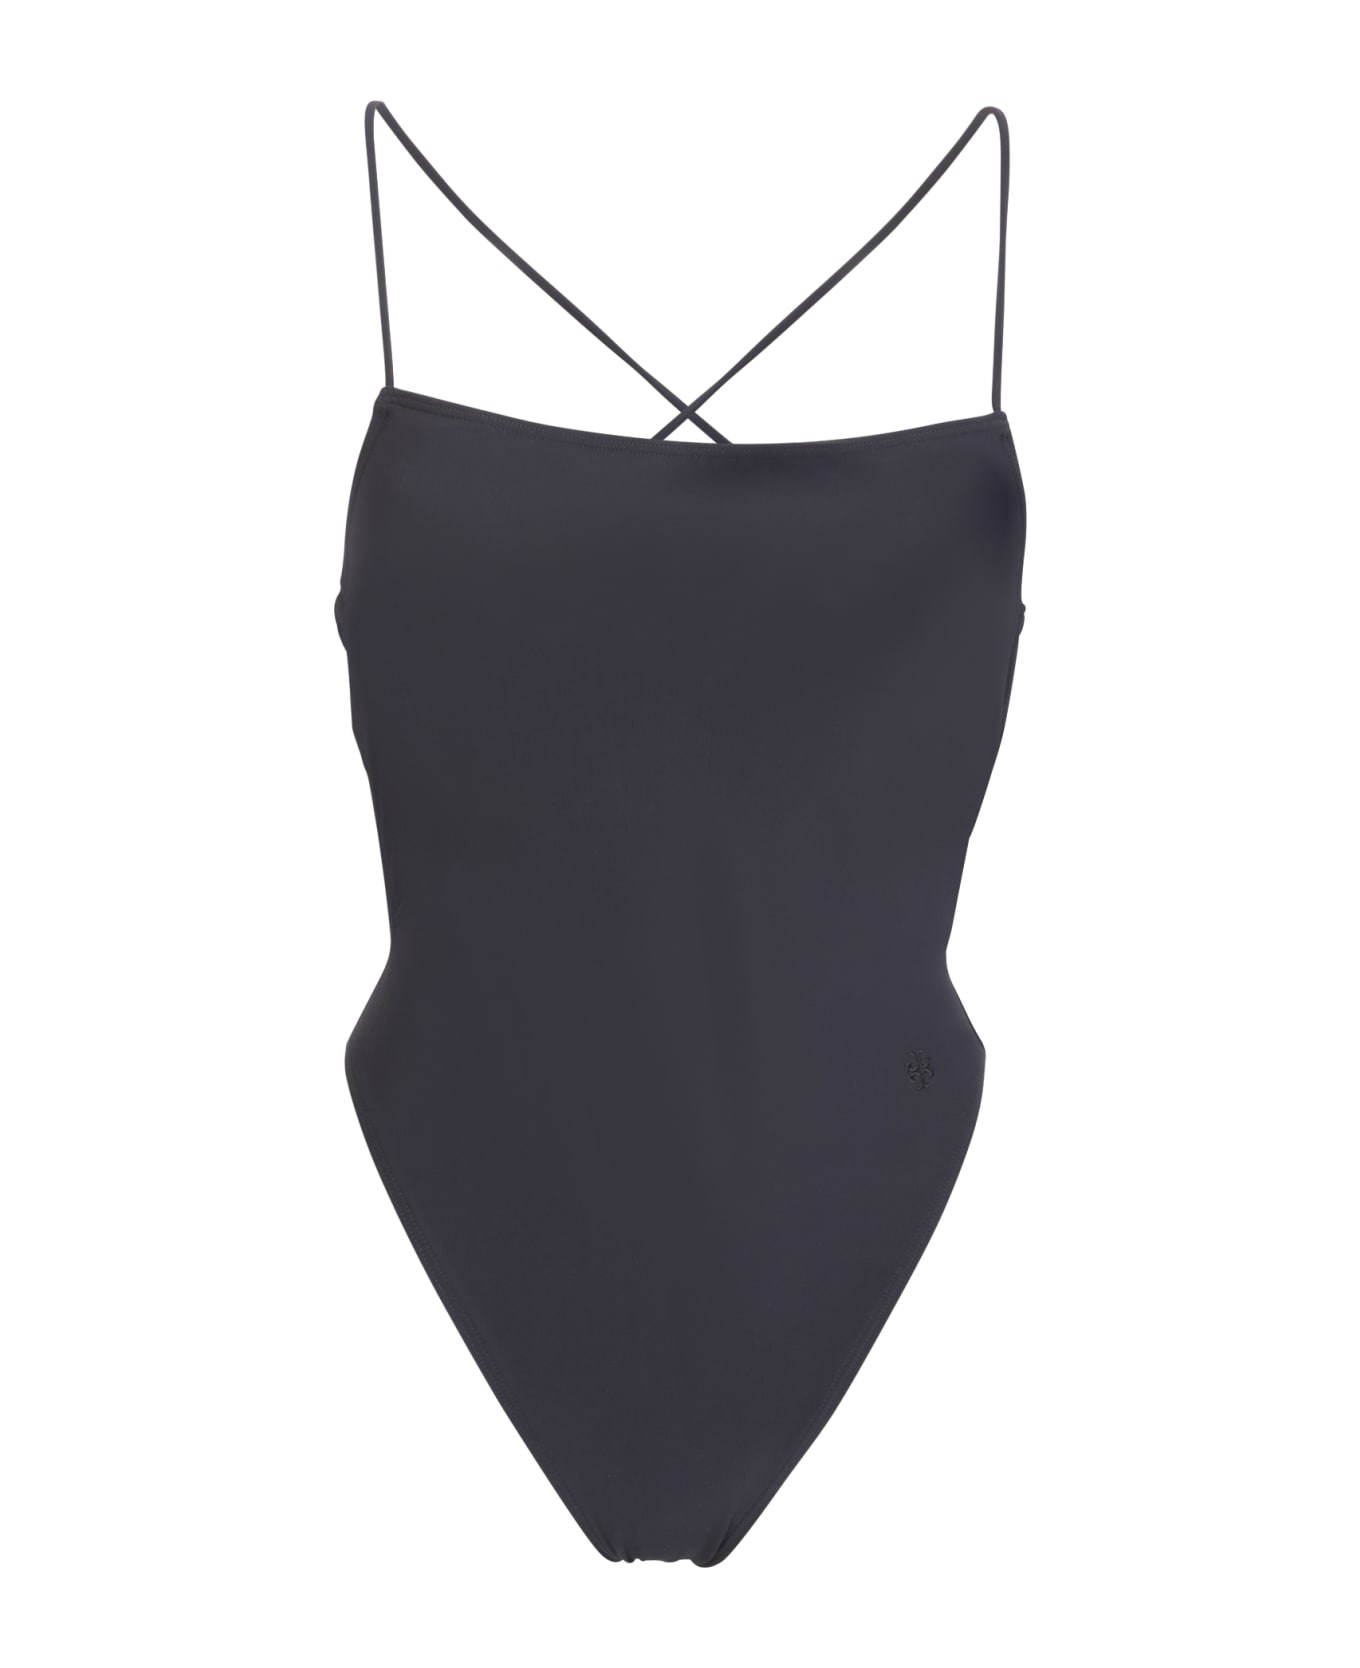 Tory Burch One-piece Swimsuit - Black